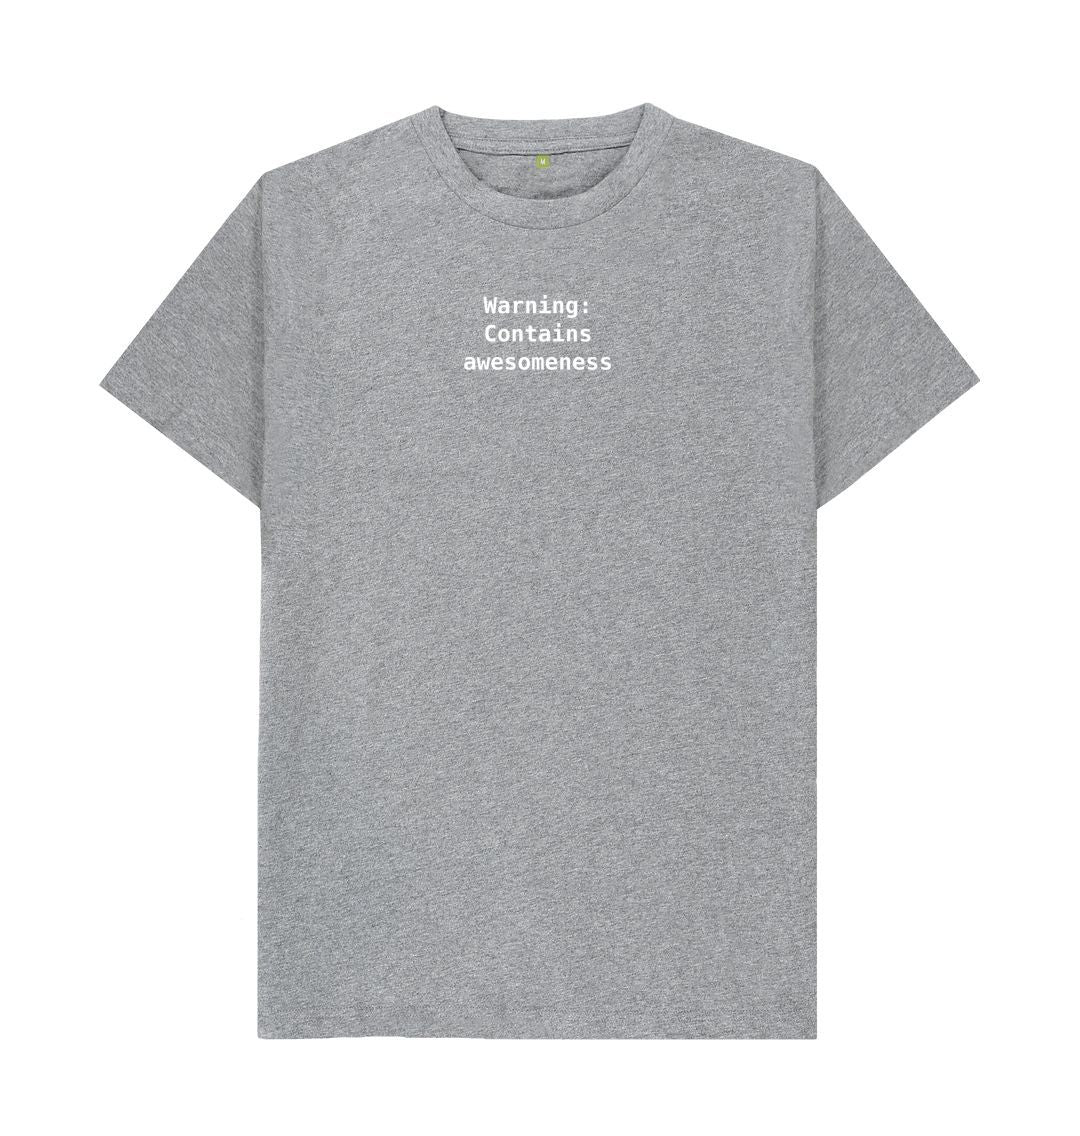 Athletic Grey Warning: Contains awesomeness unisex T-shirt